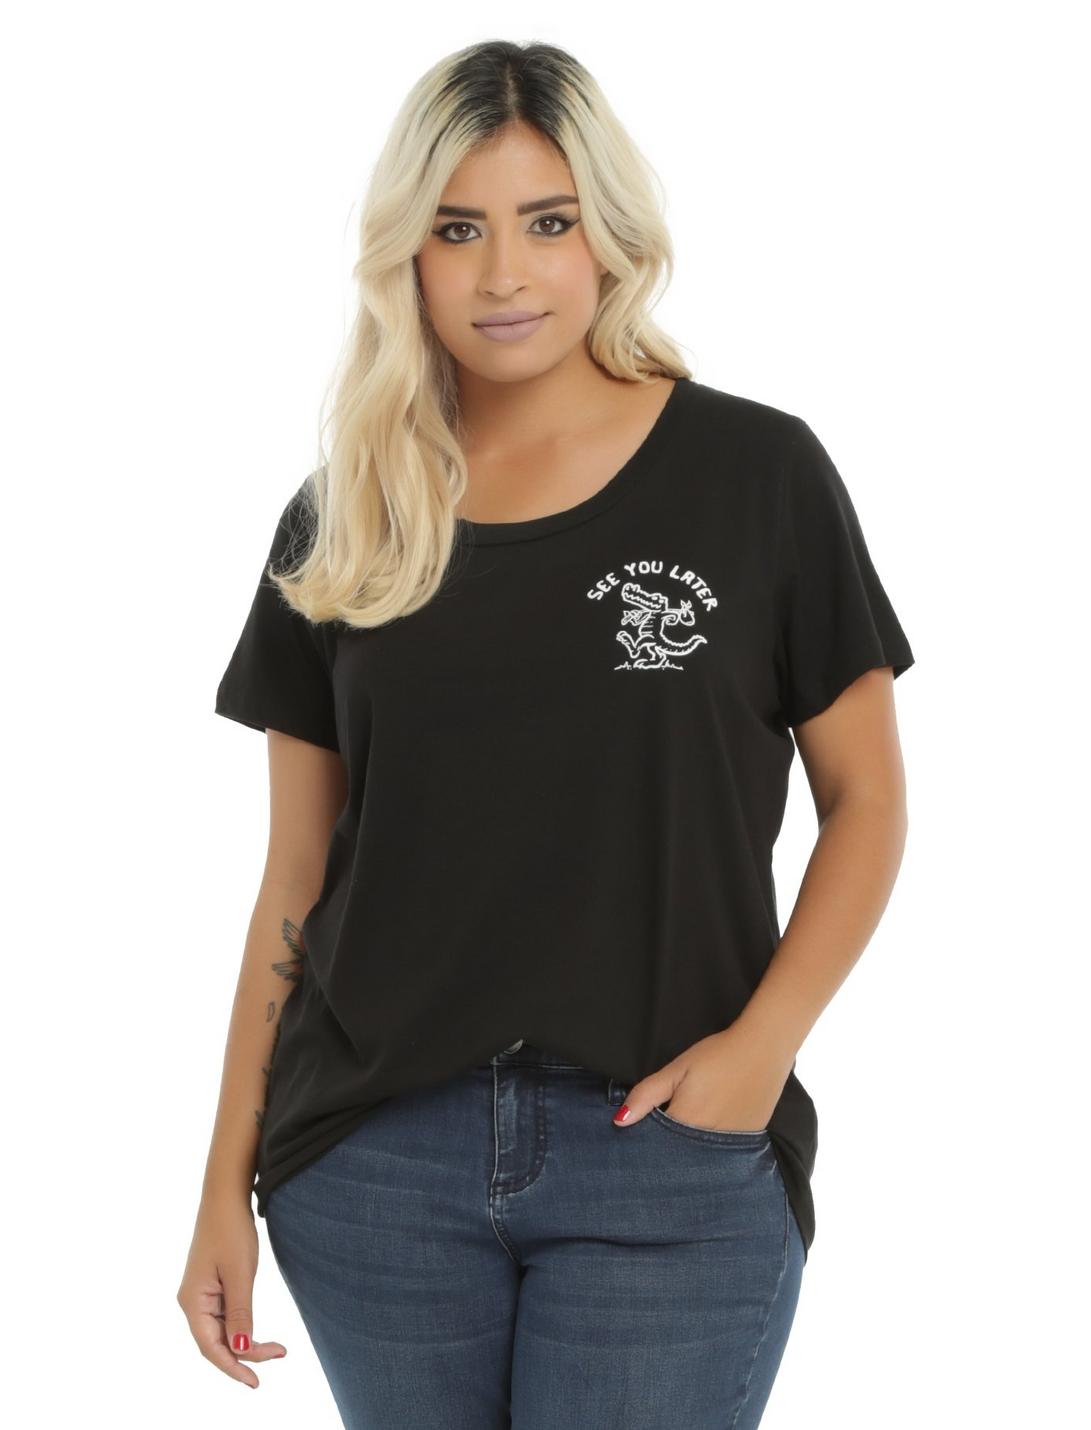 See You Later Gator Girls T-Shirt Plus Size, BLACK, hi-res